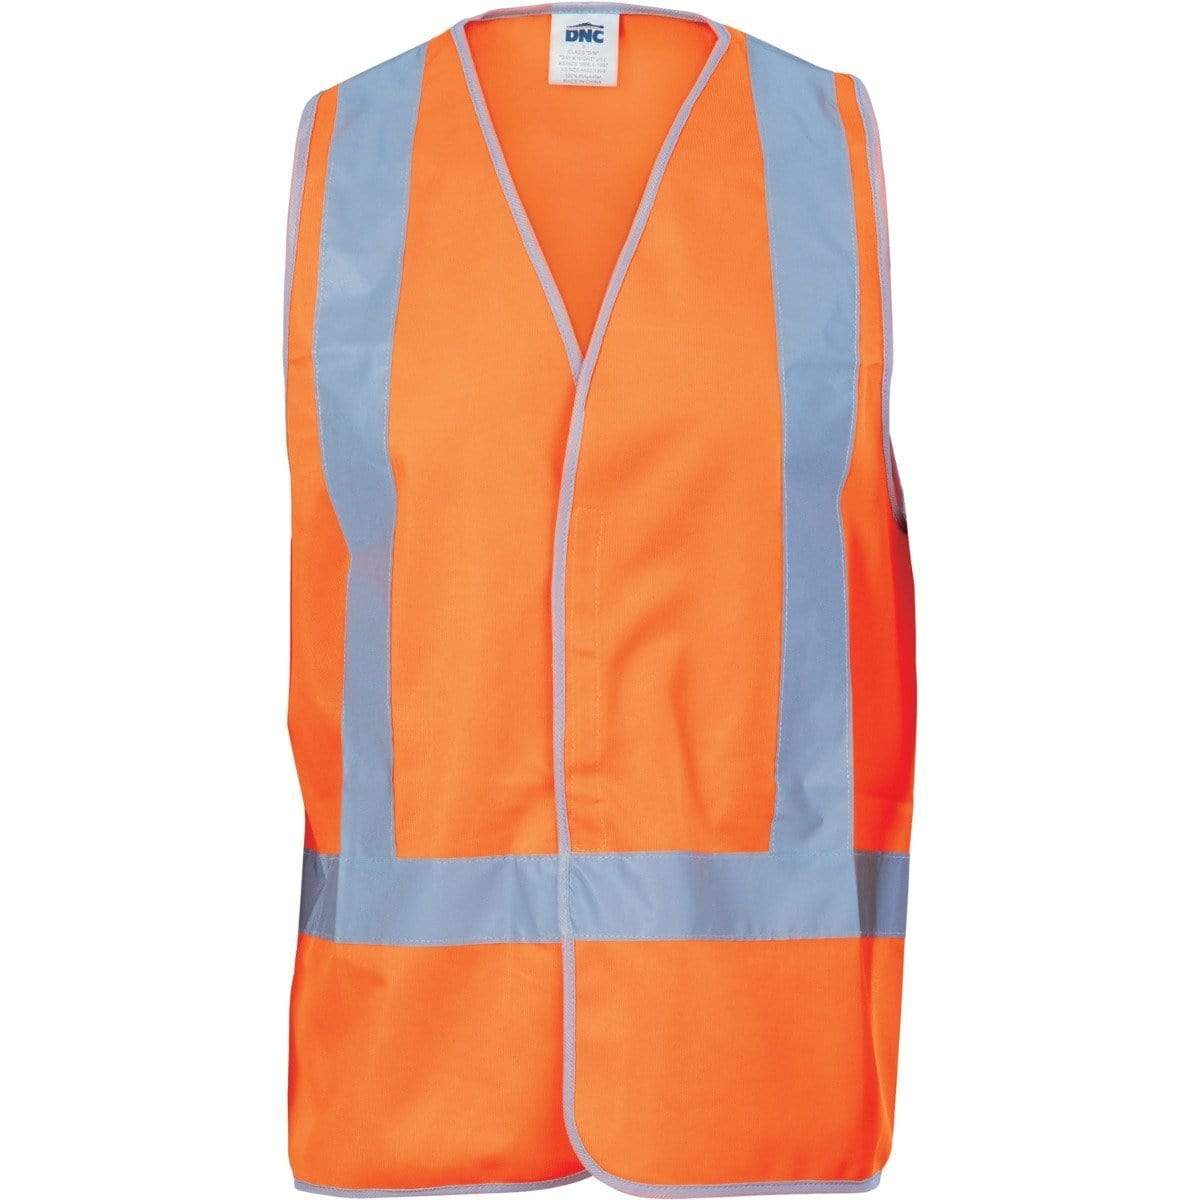 Dnc Workwear Day/night Cross Back Safety Vest - 3805 Work Wear DNC Workwear Orange S 